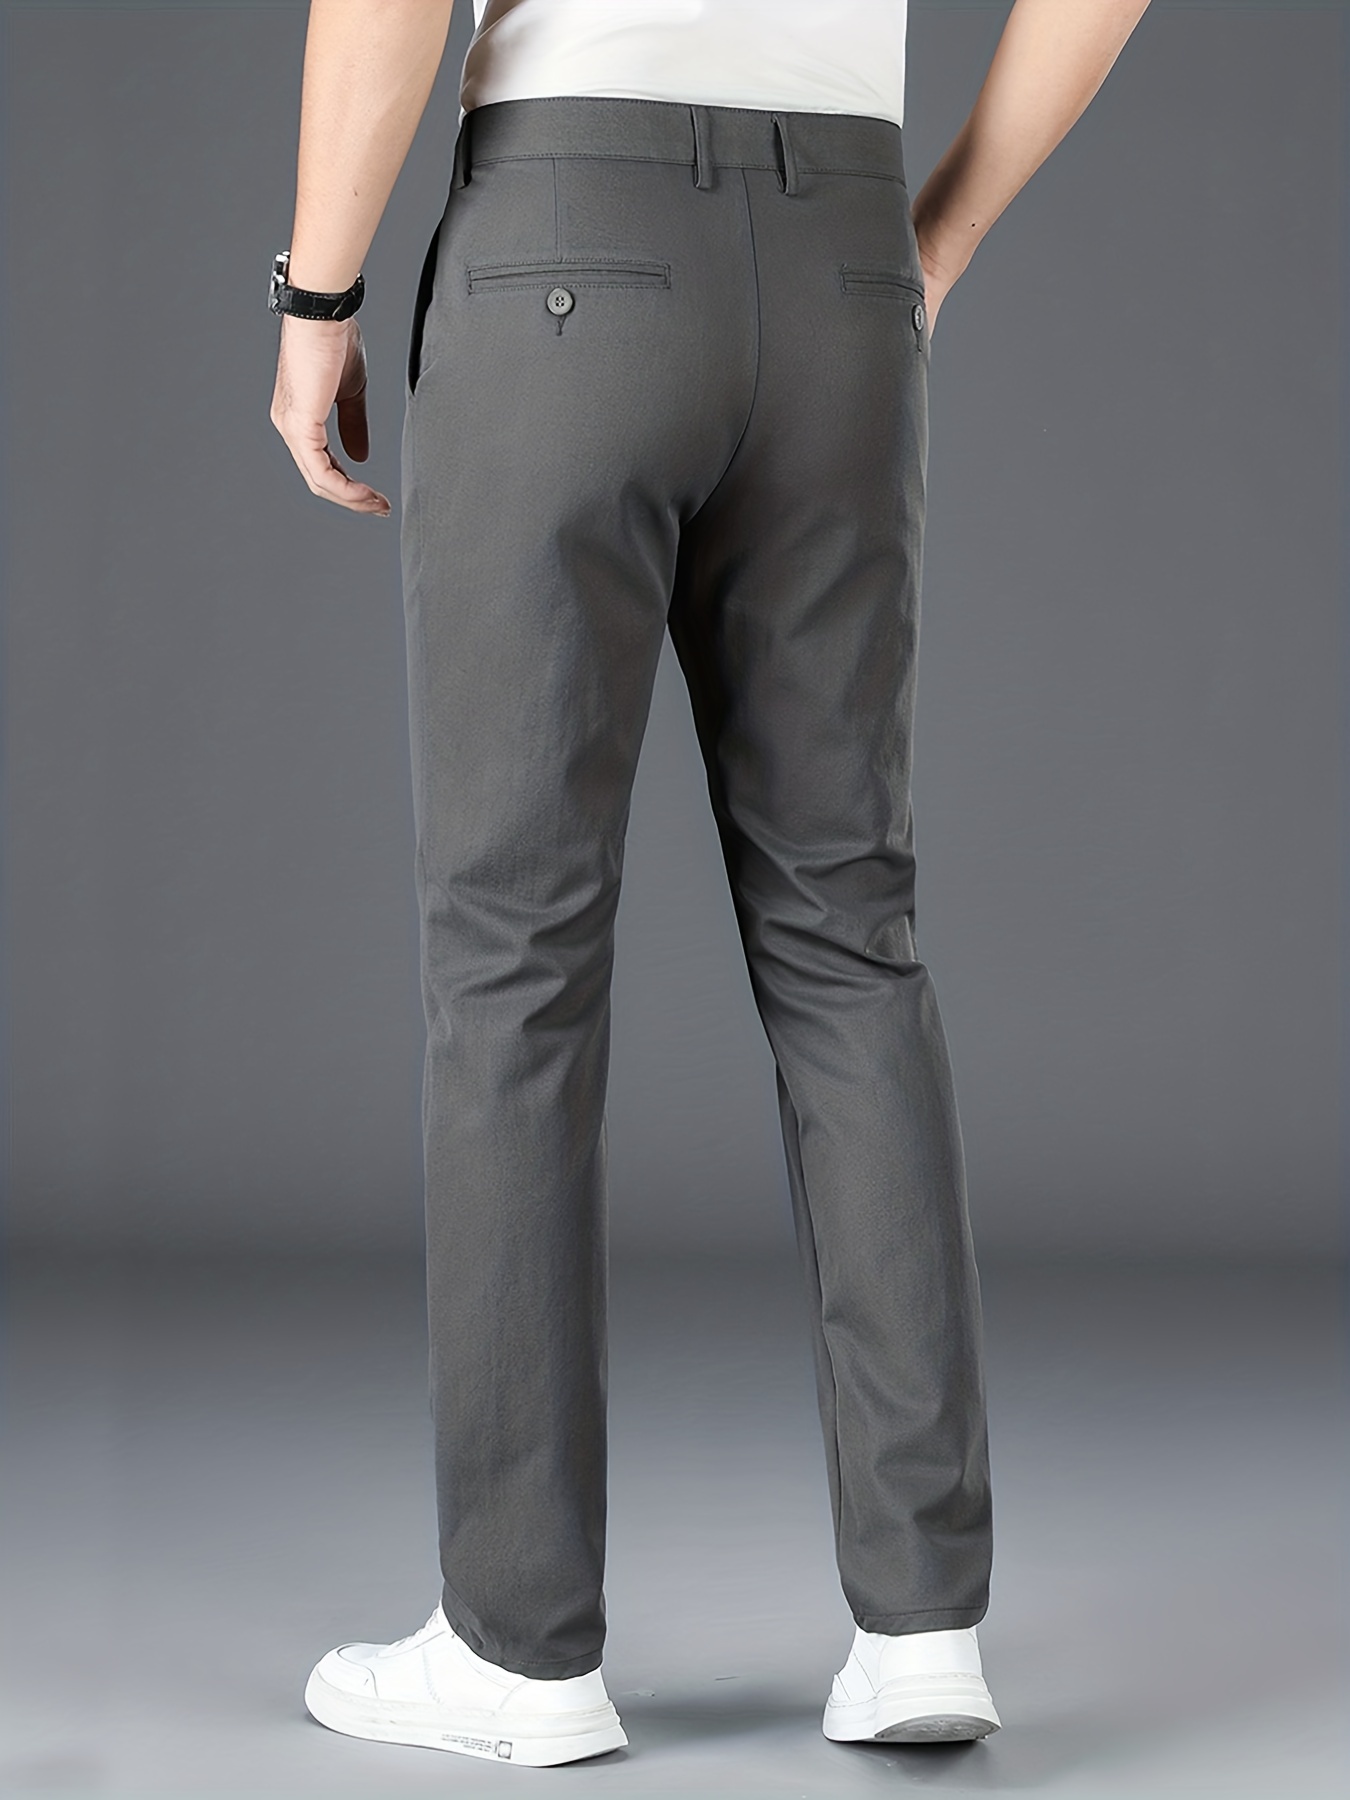 Classic Design Dress Pants, Men's Formal Solid Color Slightly Stretch Dress  Pants For Business